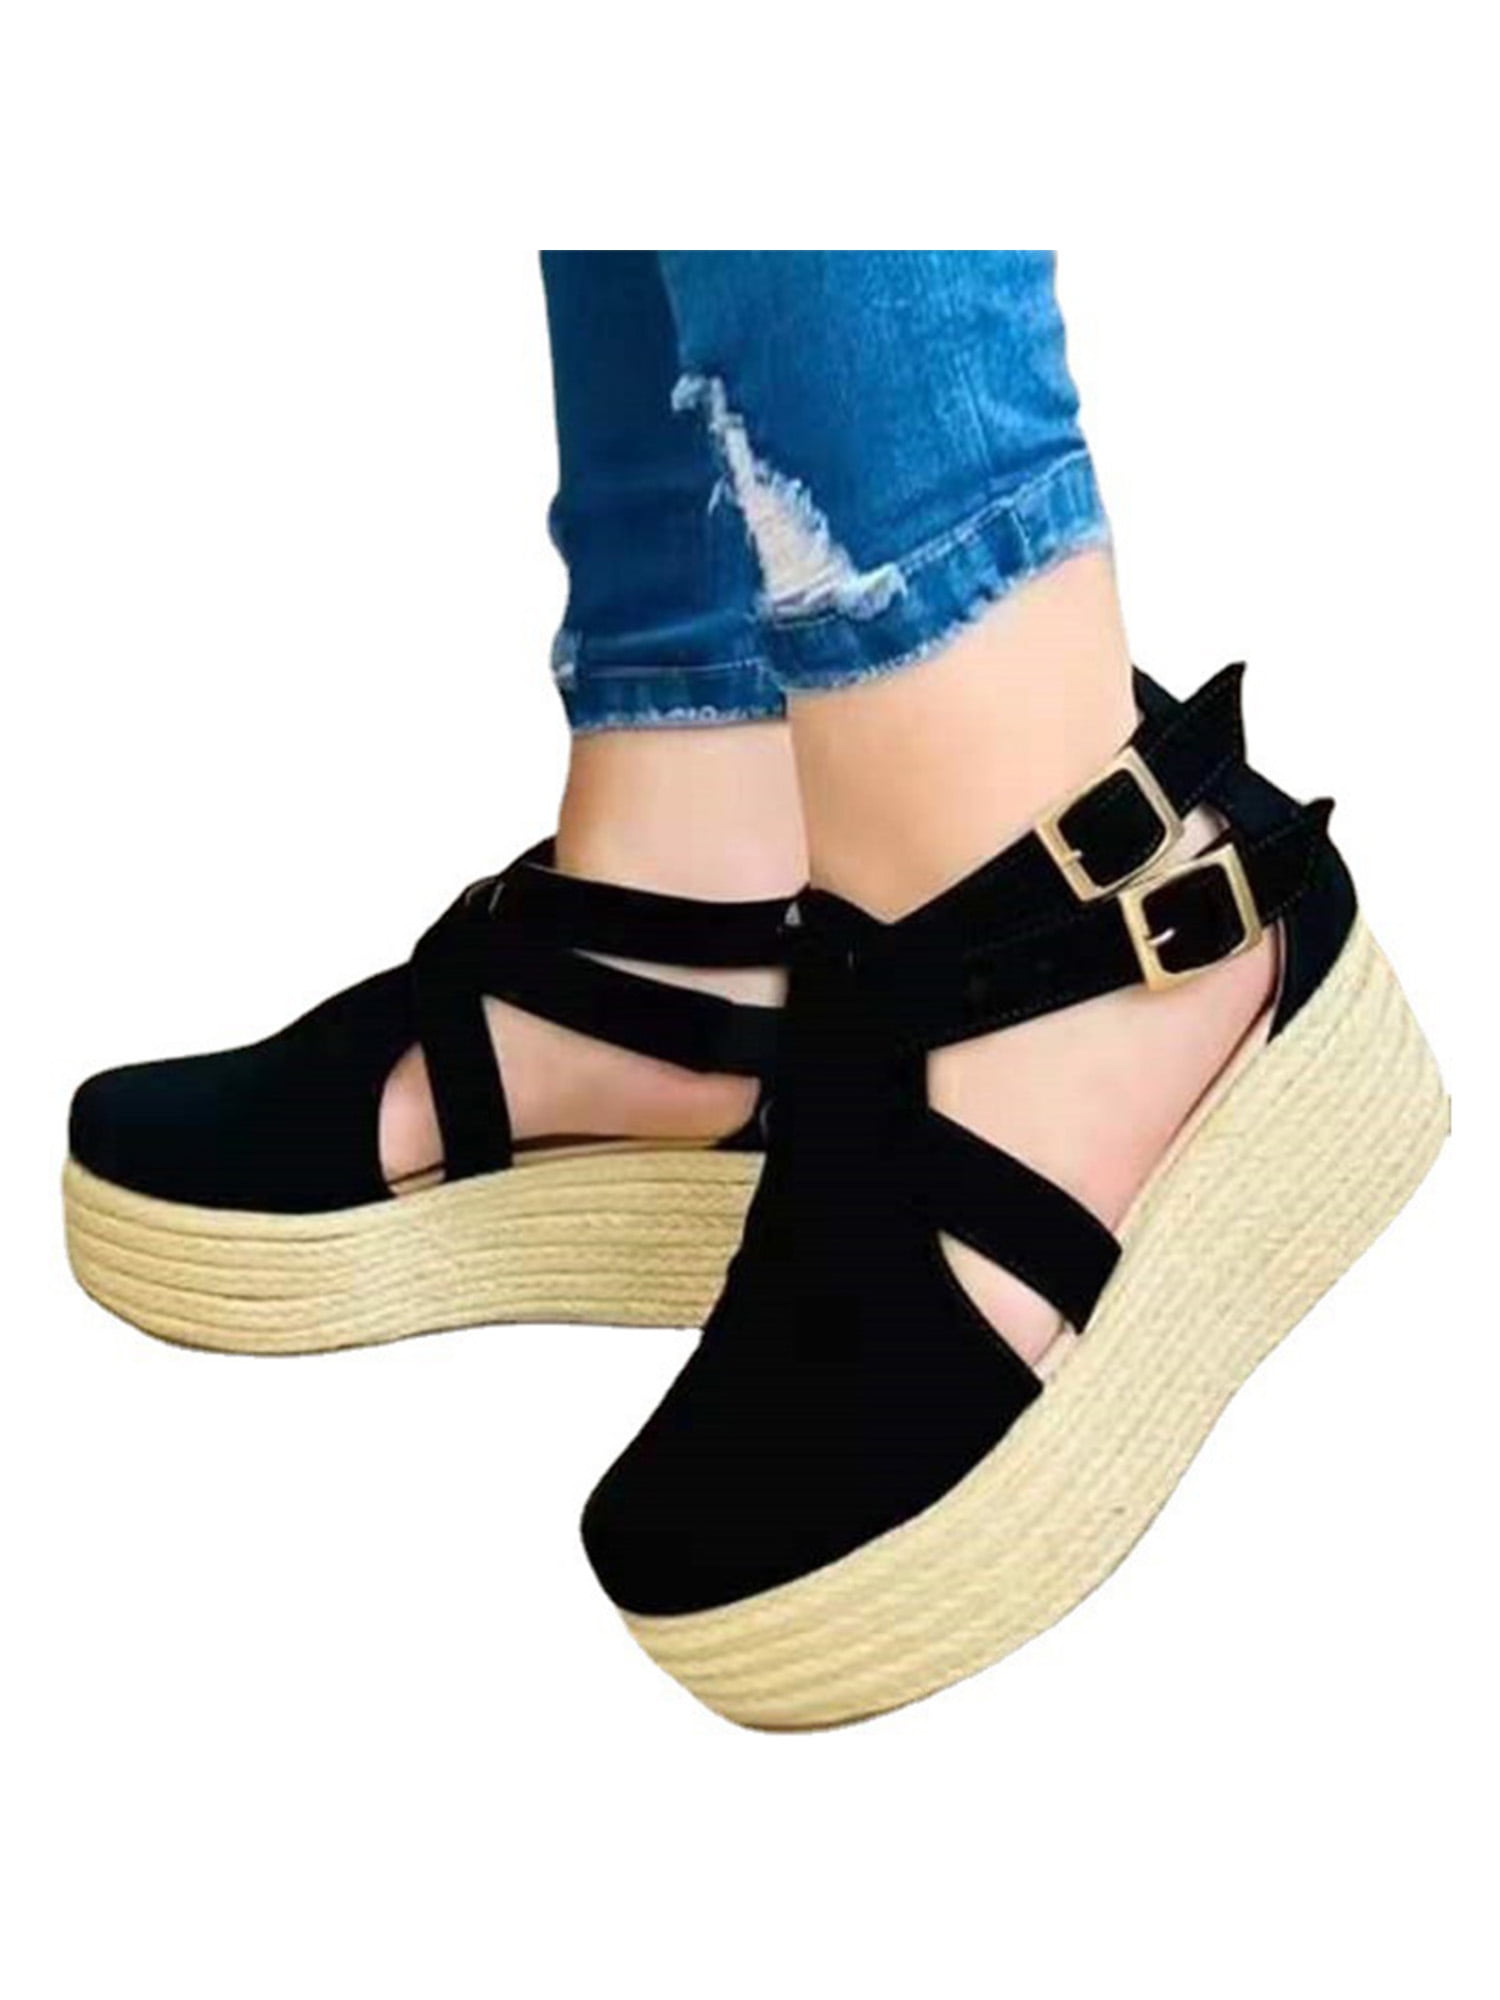 Women Casual Platform Wedge Sandals Ankle Strap Buckle Summer Peep Toe Shoe Size 